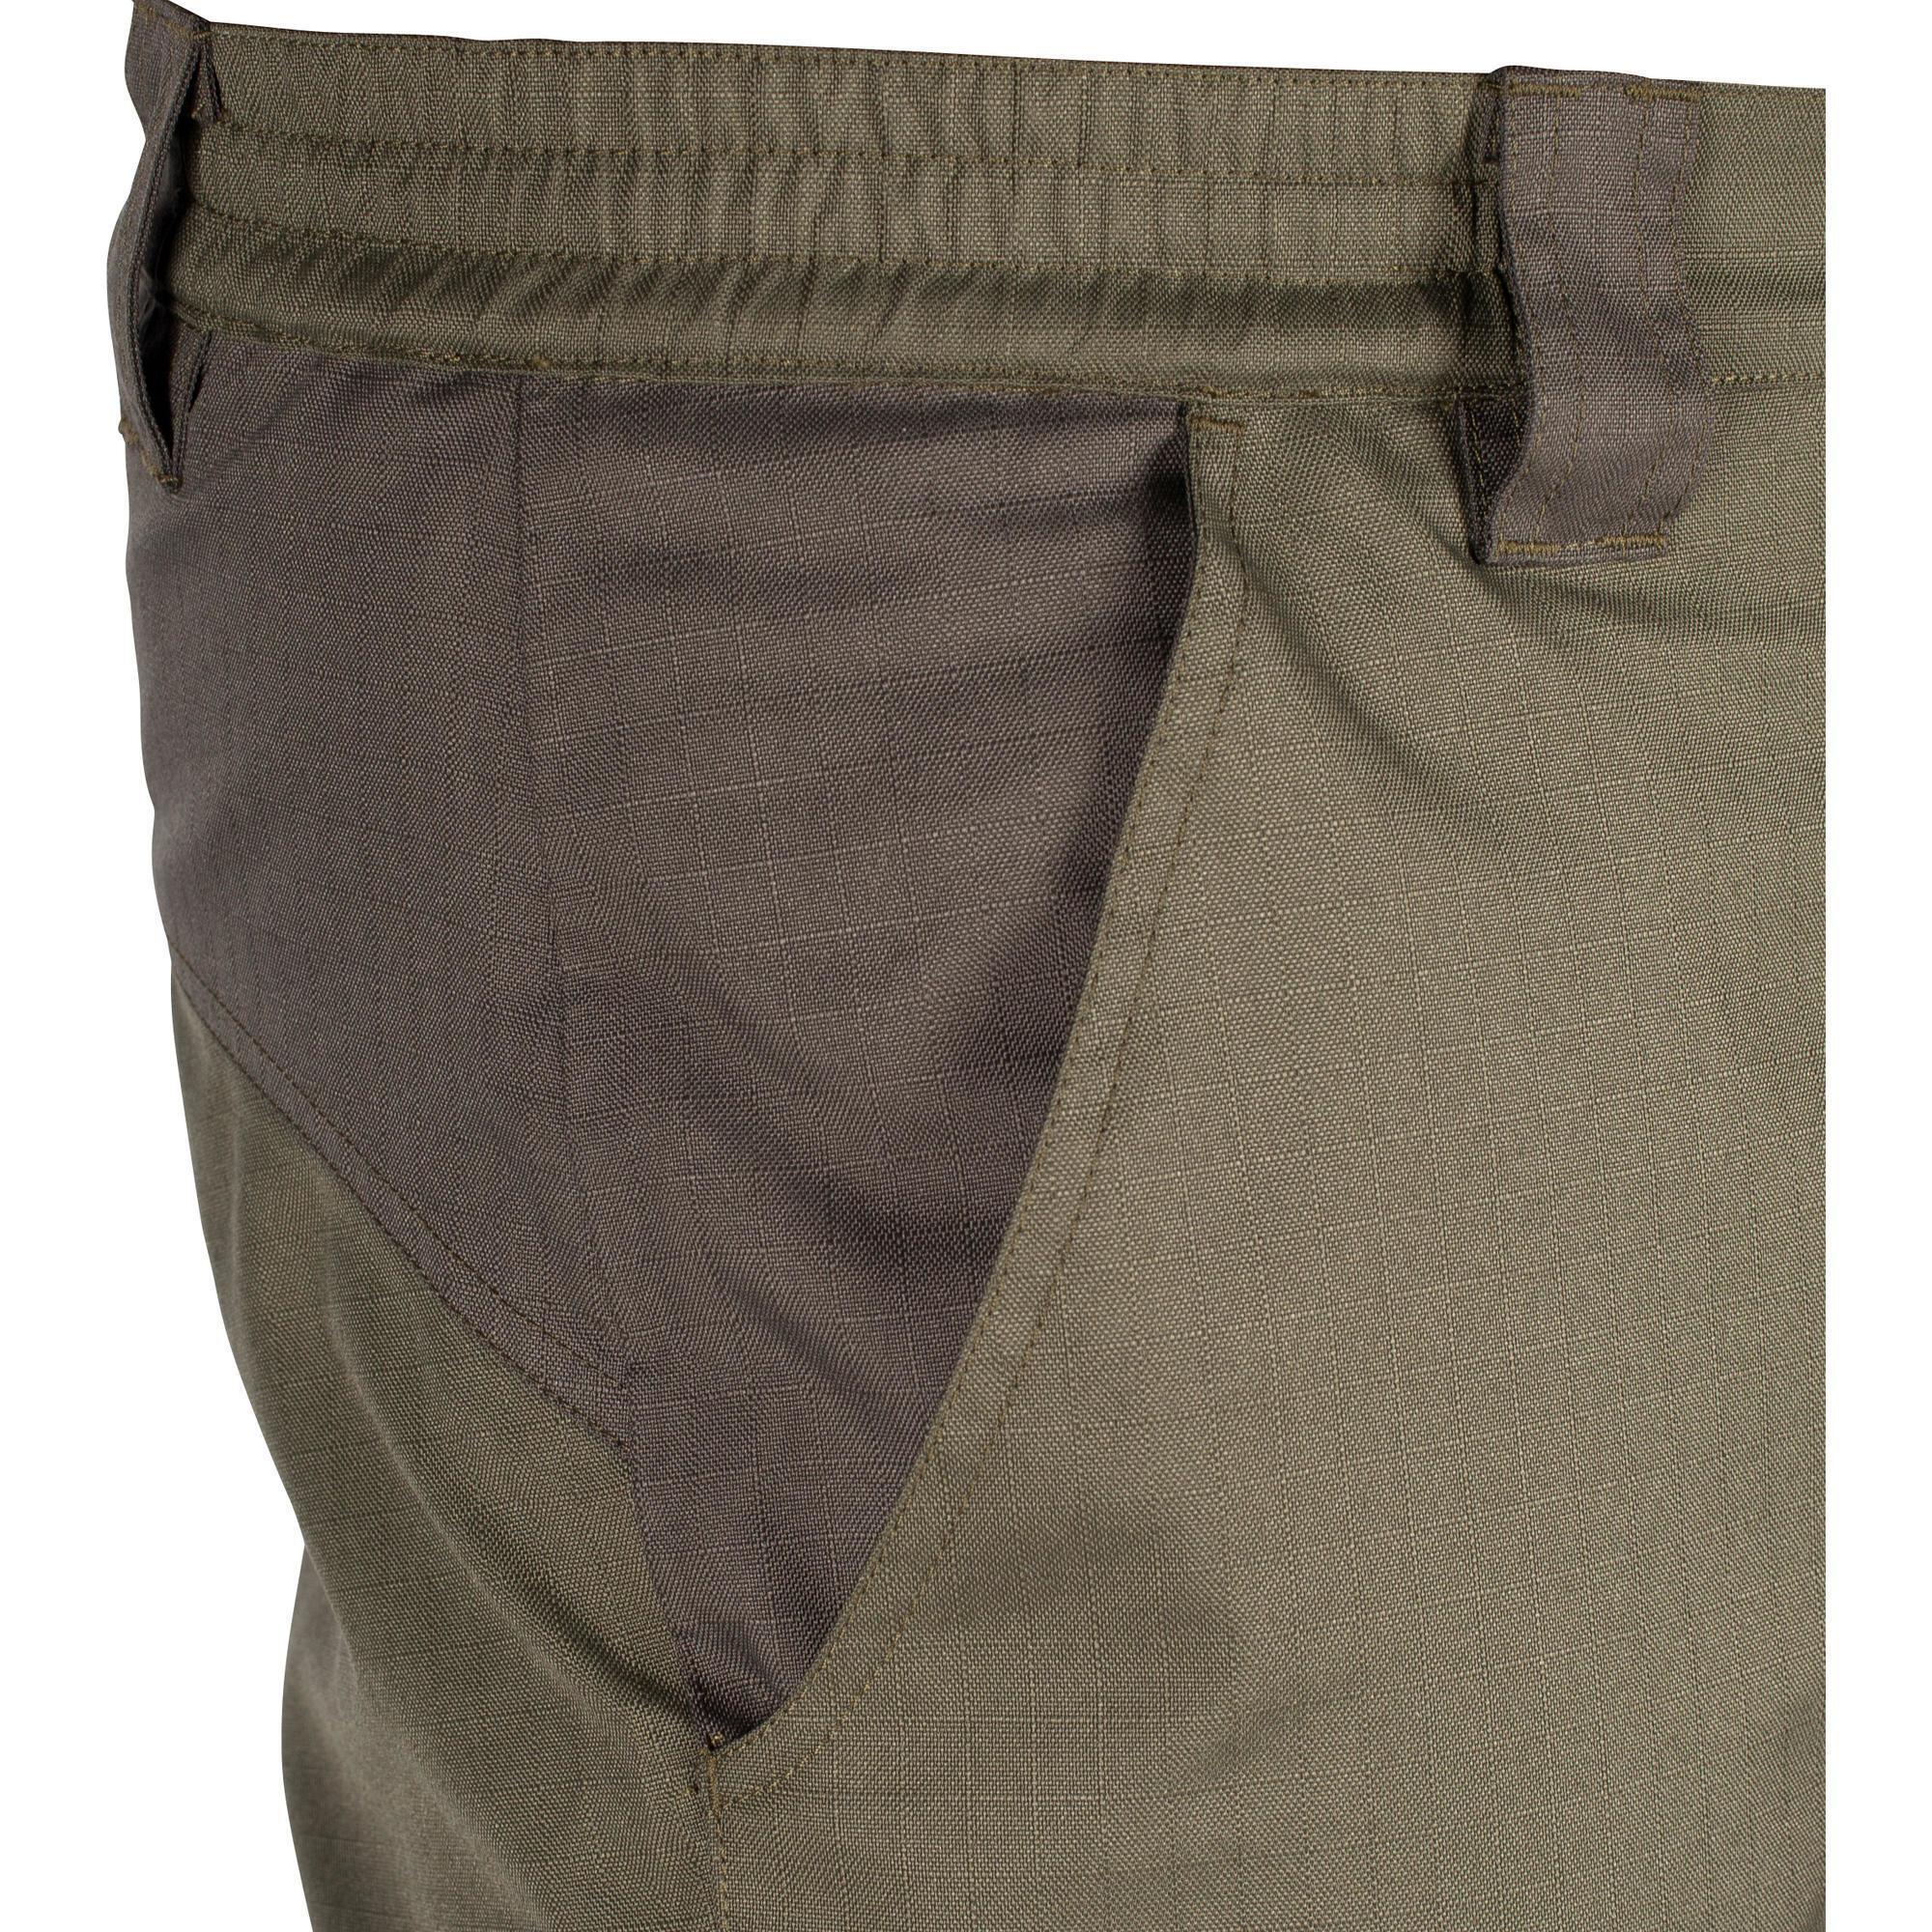 Durable Waterproof Trousers - Green 5/5